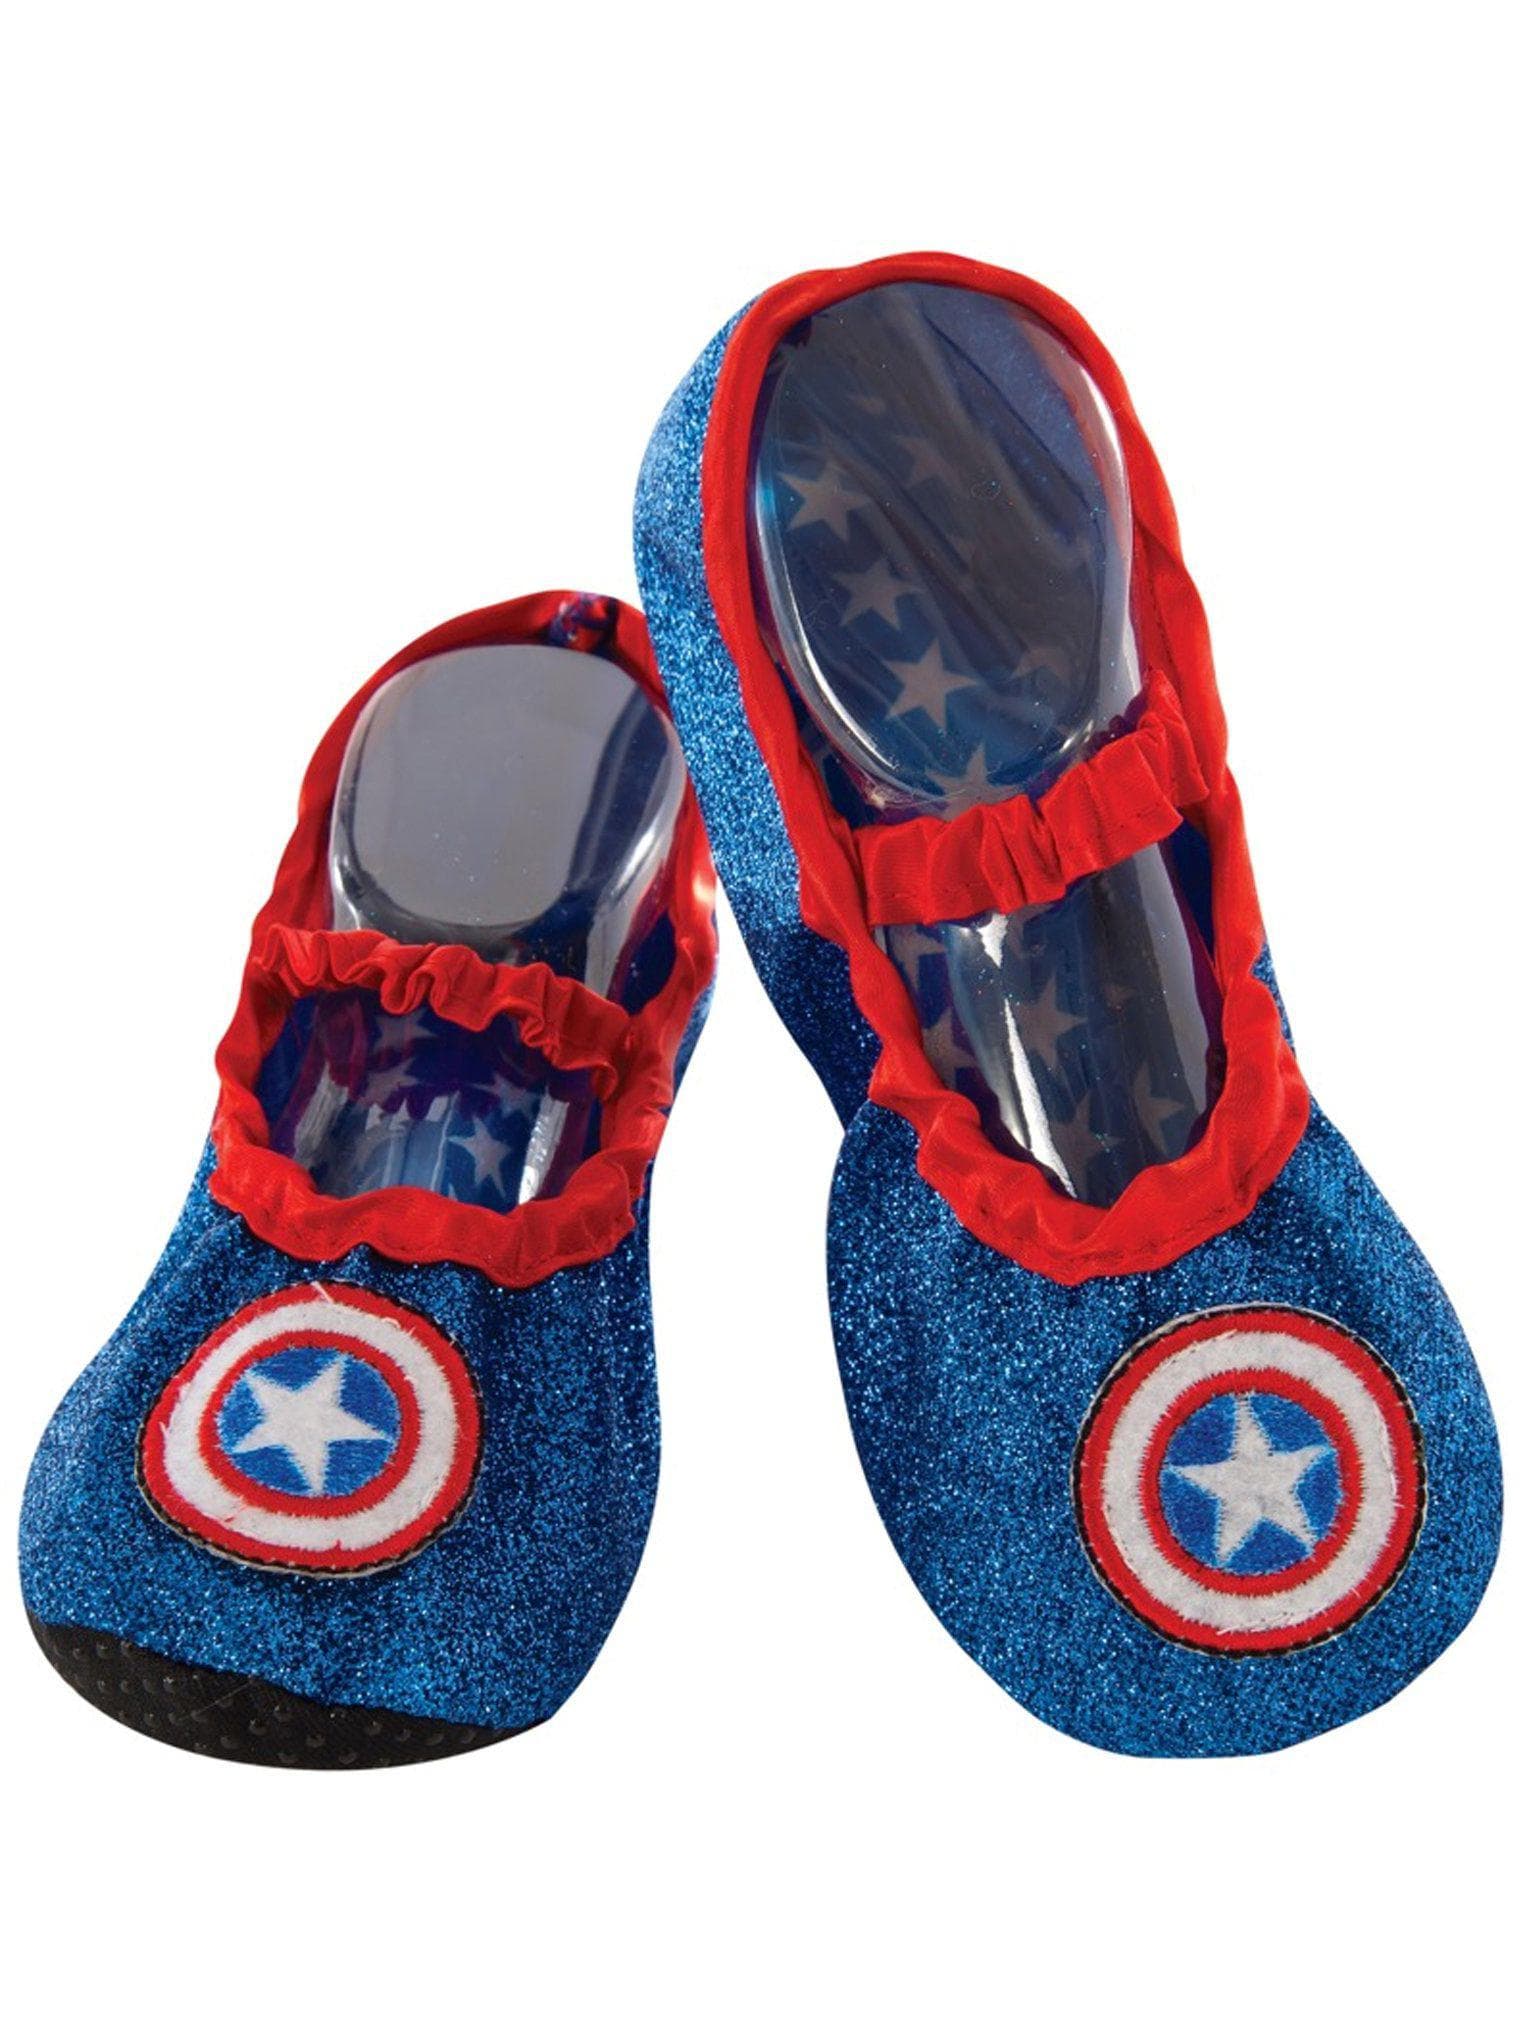 Toddler Blue Captain America Slipper Shoes - costumes.com